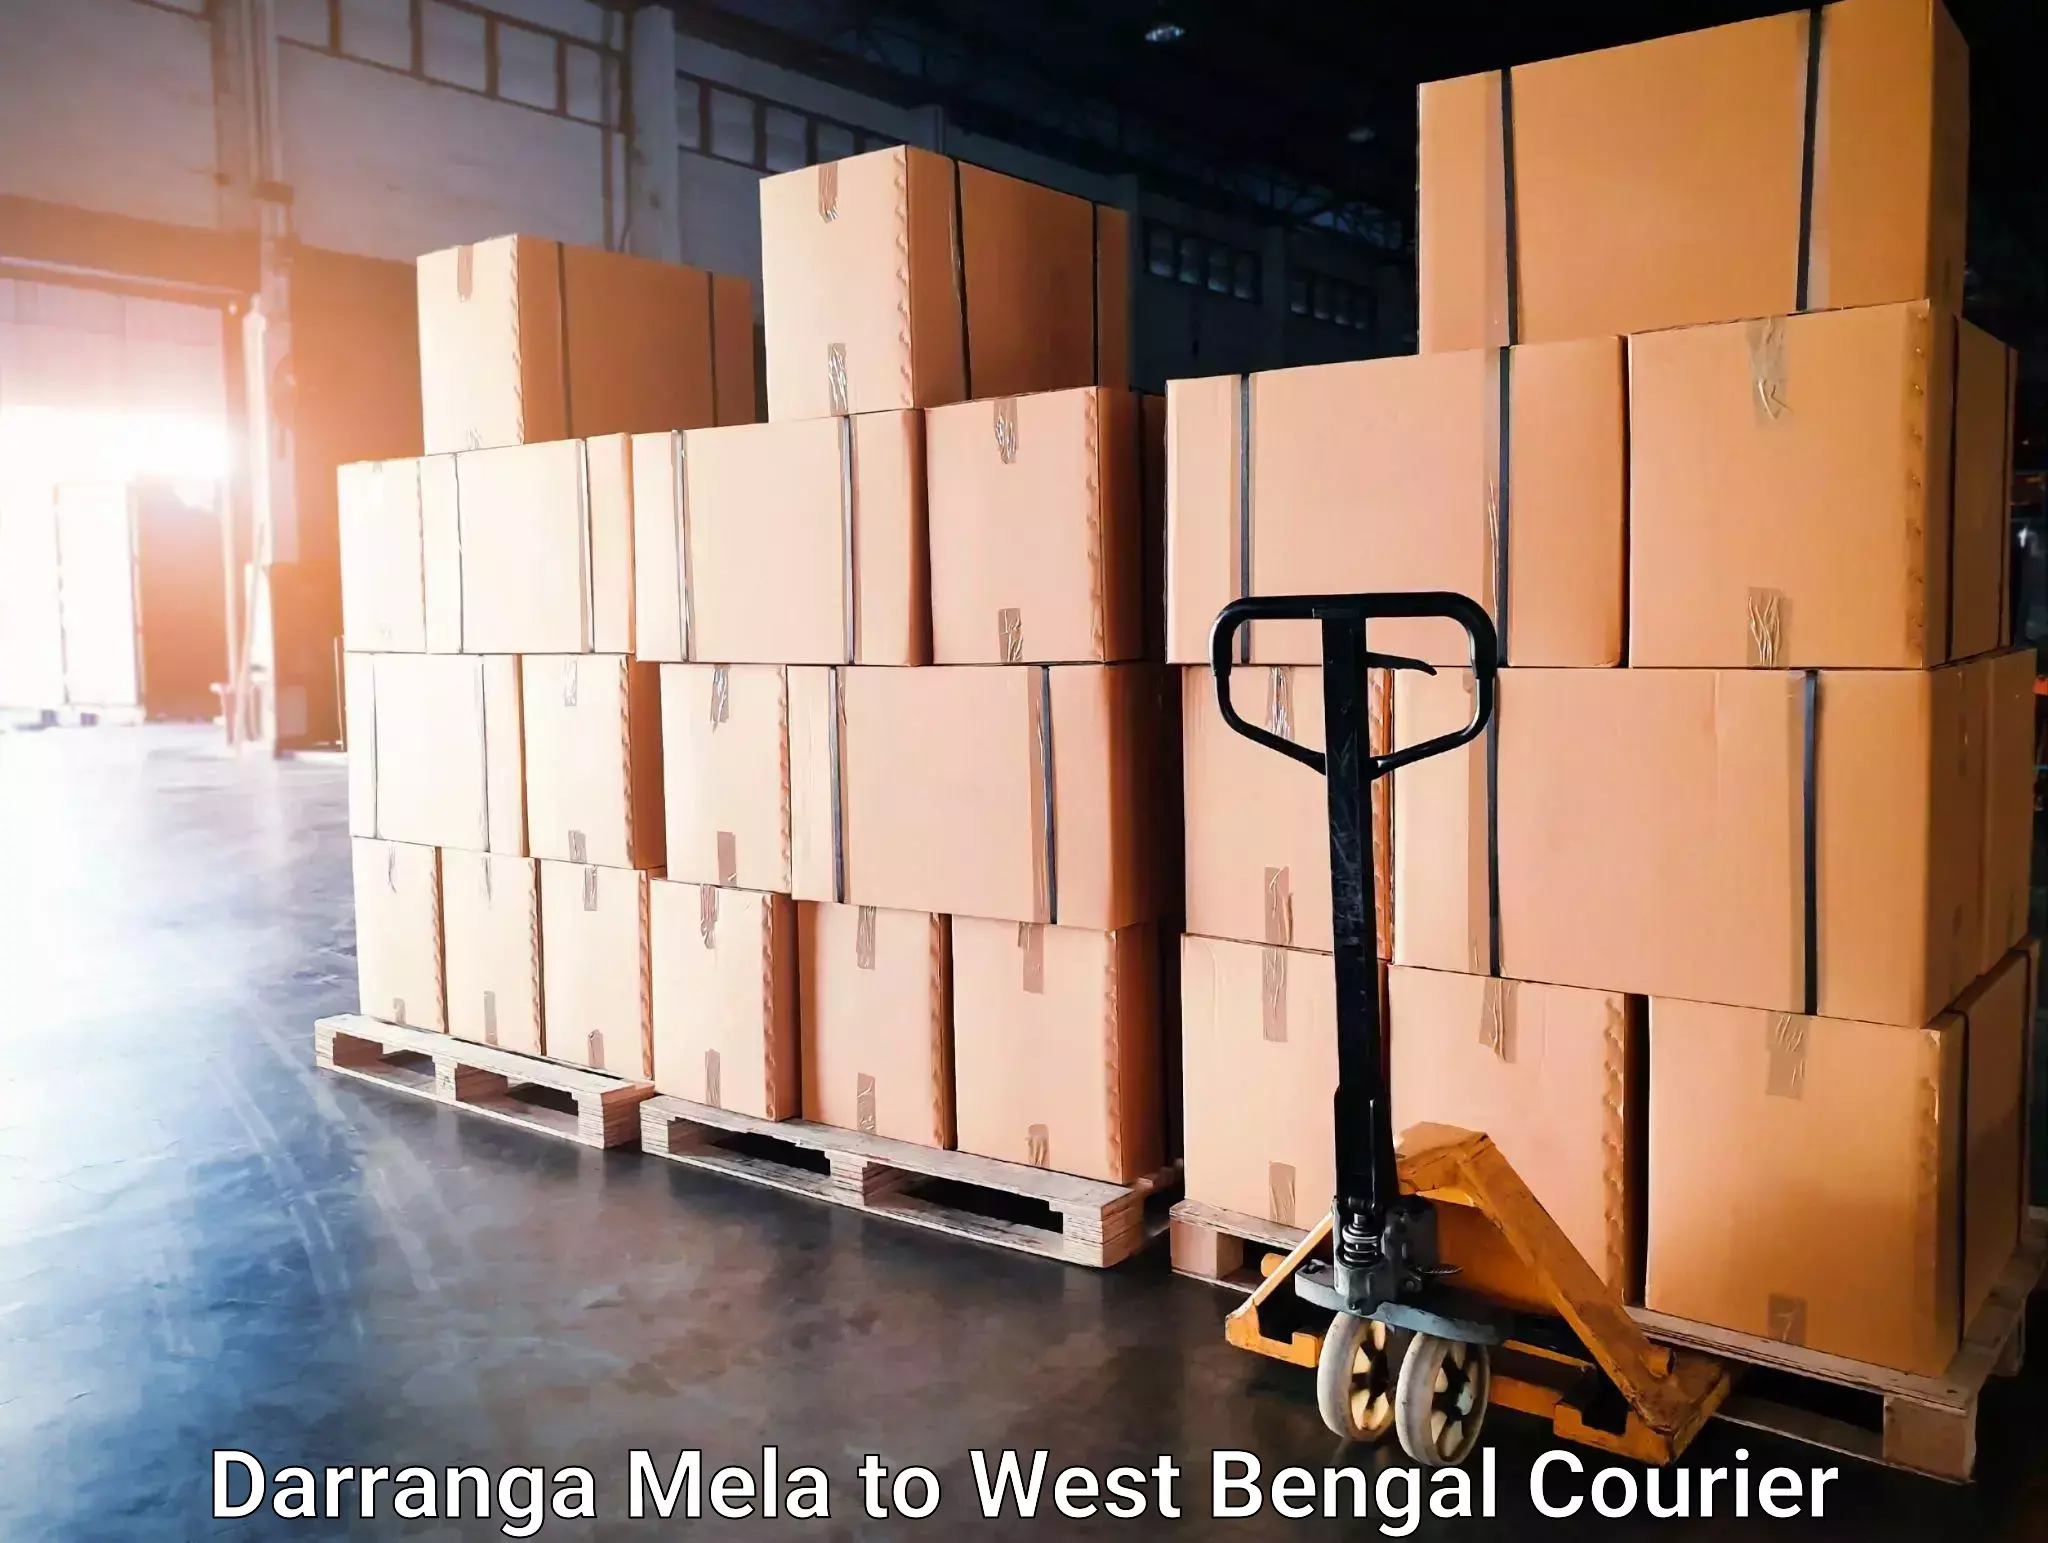 Express delivery capabilities Darranga Mela to Paschim Medinipur